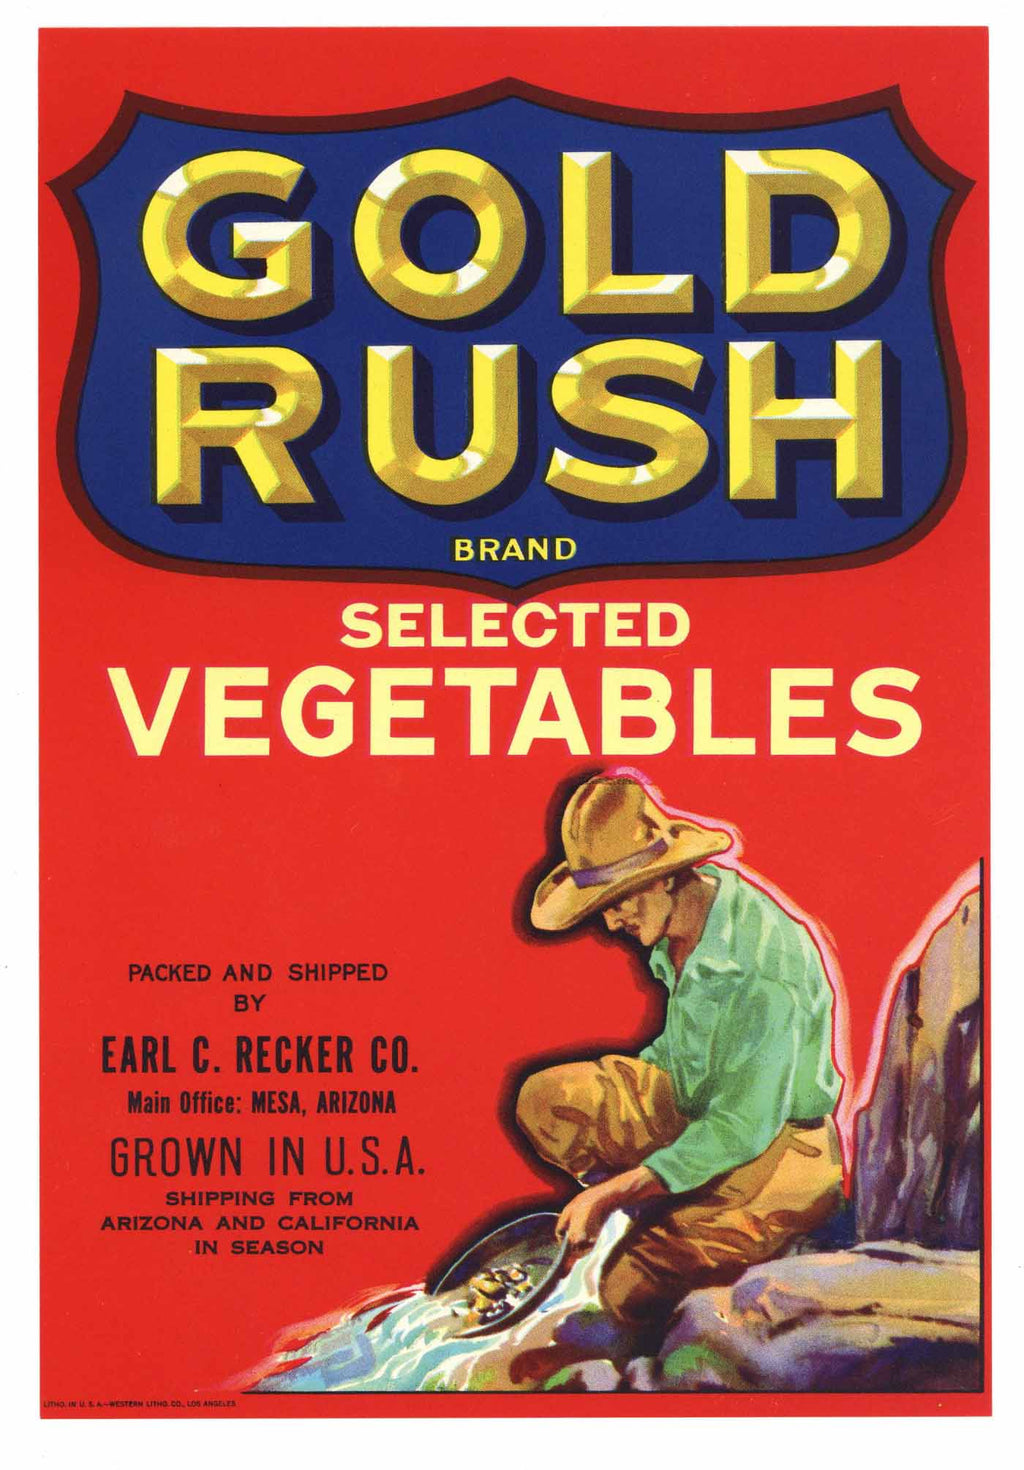 Gold Rush Brand Vintage Arizona Vegetable Crate Label